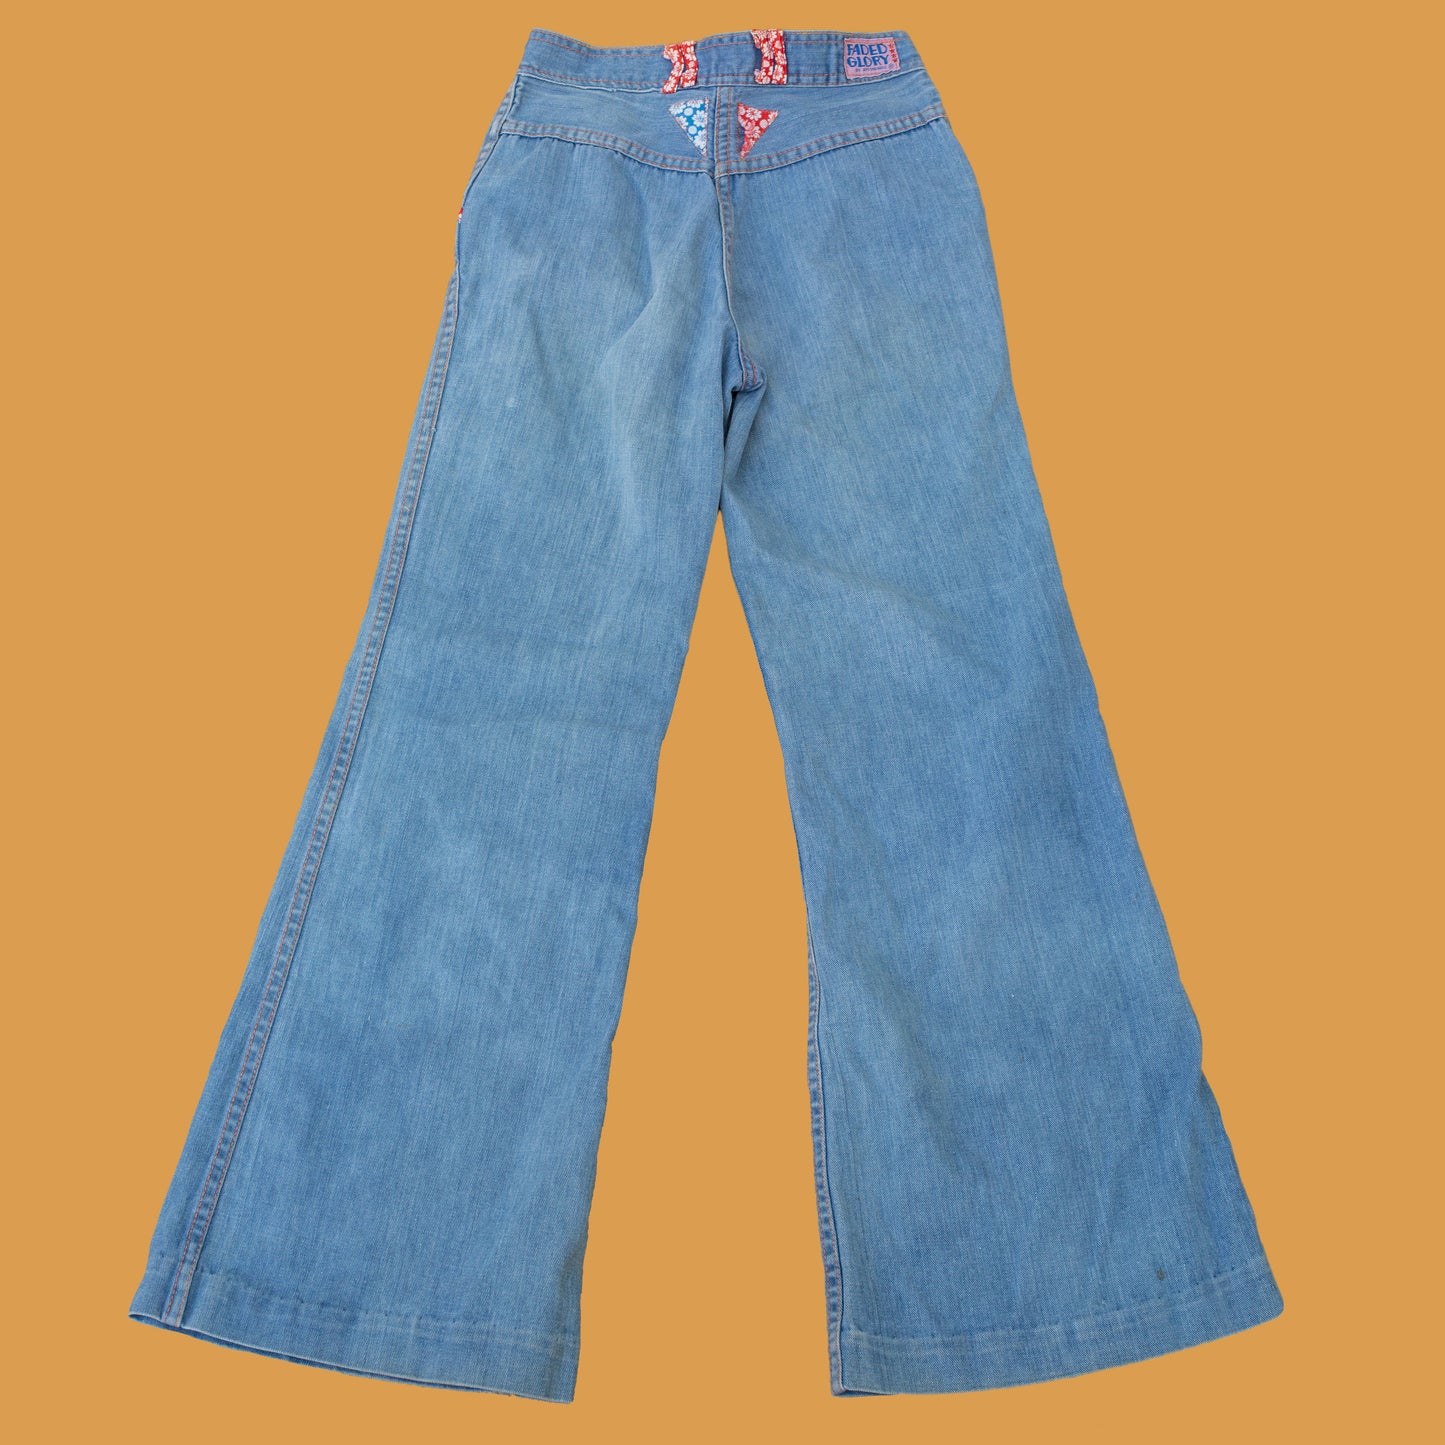 Vintage 1970s Beaded Faded Glory Bell Bottom Jeans 24/25" Waist